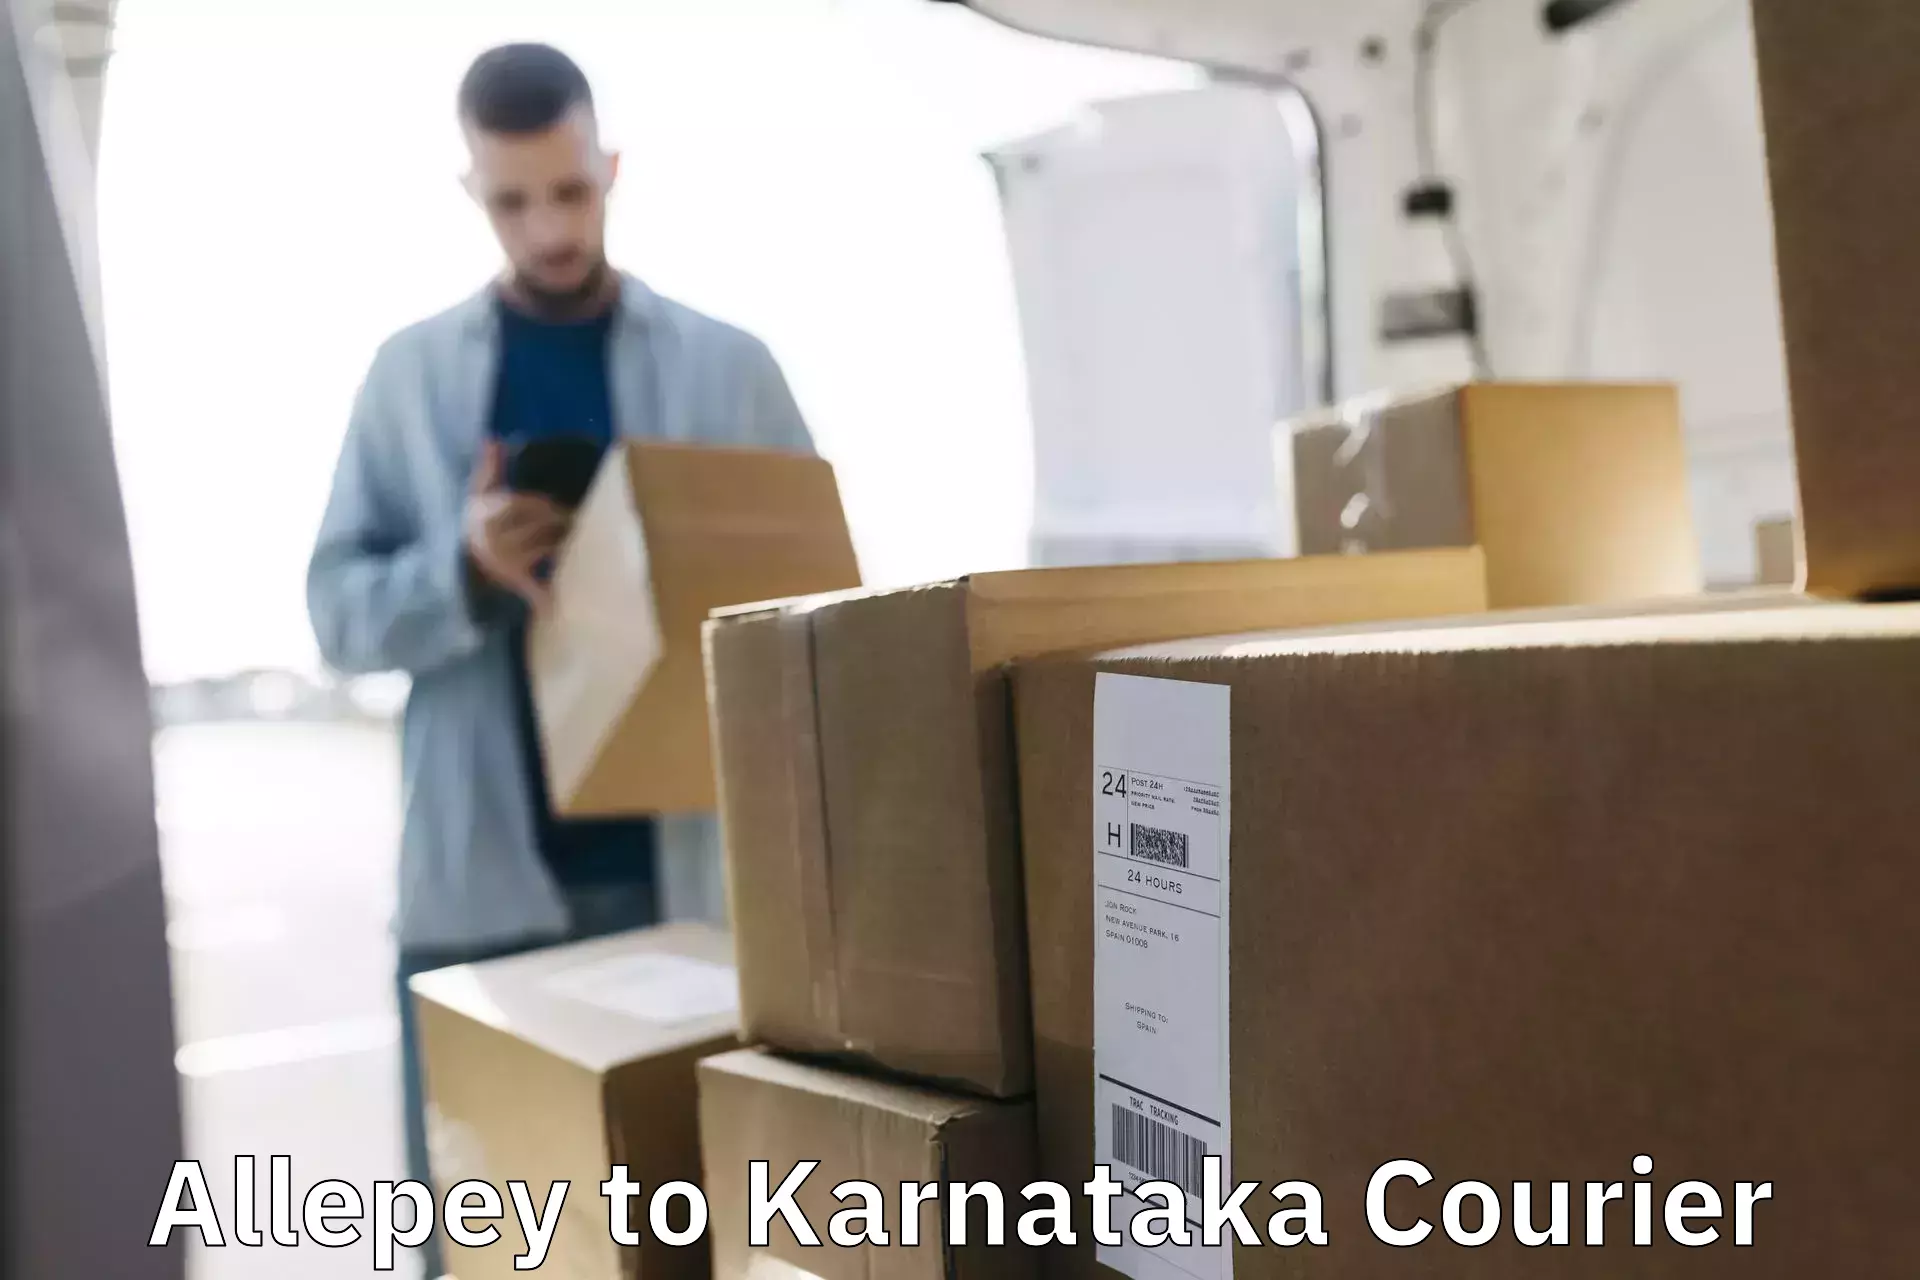 International courier networks Allepey to Karnataka